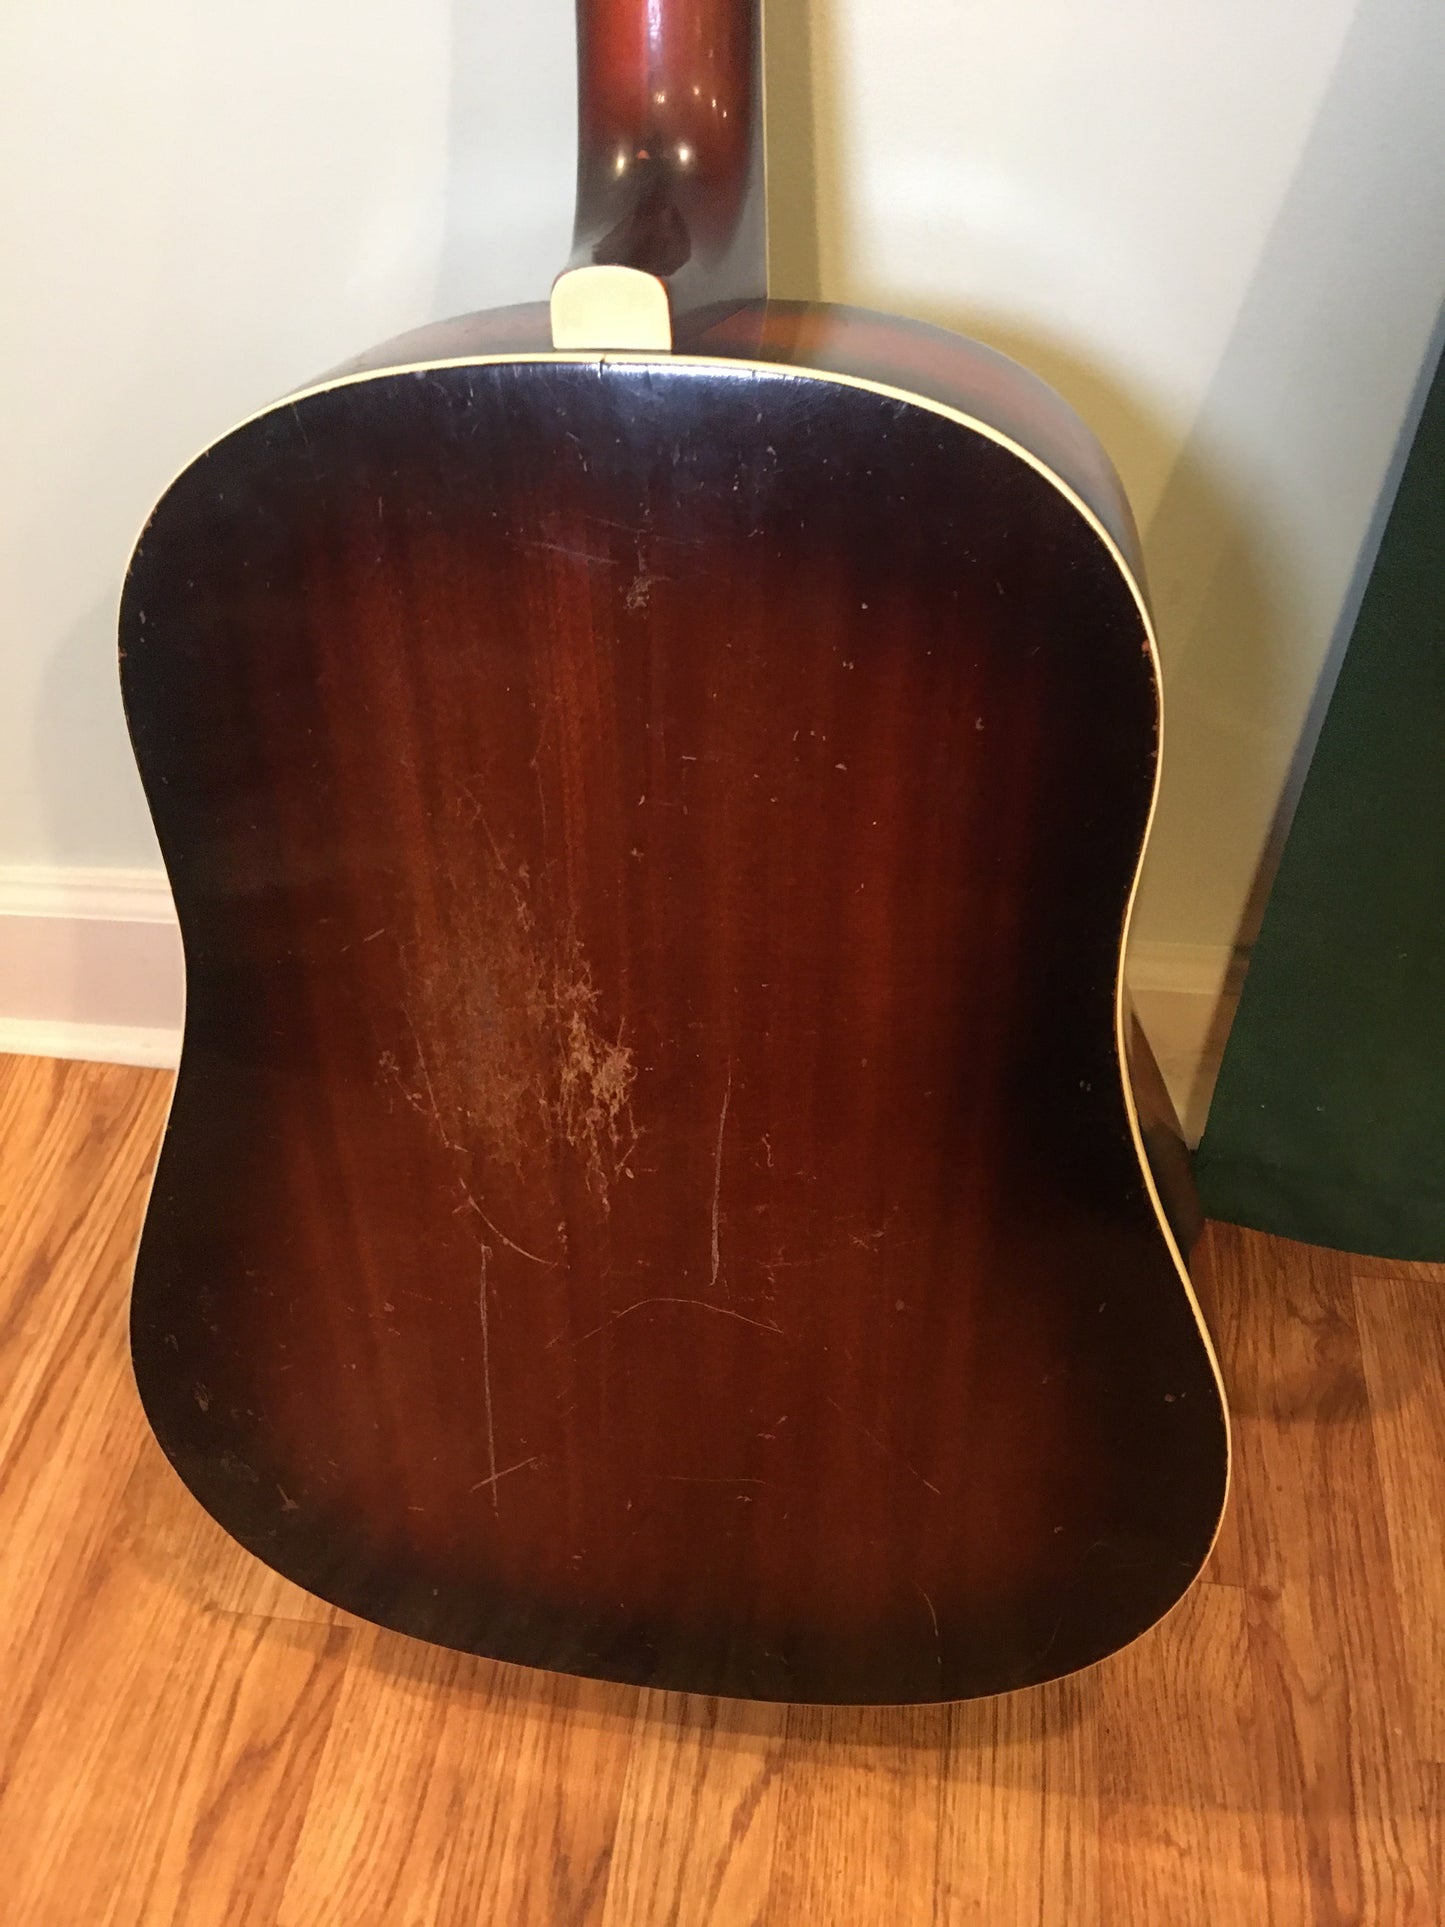 1951 Regal Milord Jumbo Acoustic Guitar Sunburst